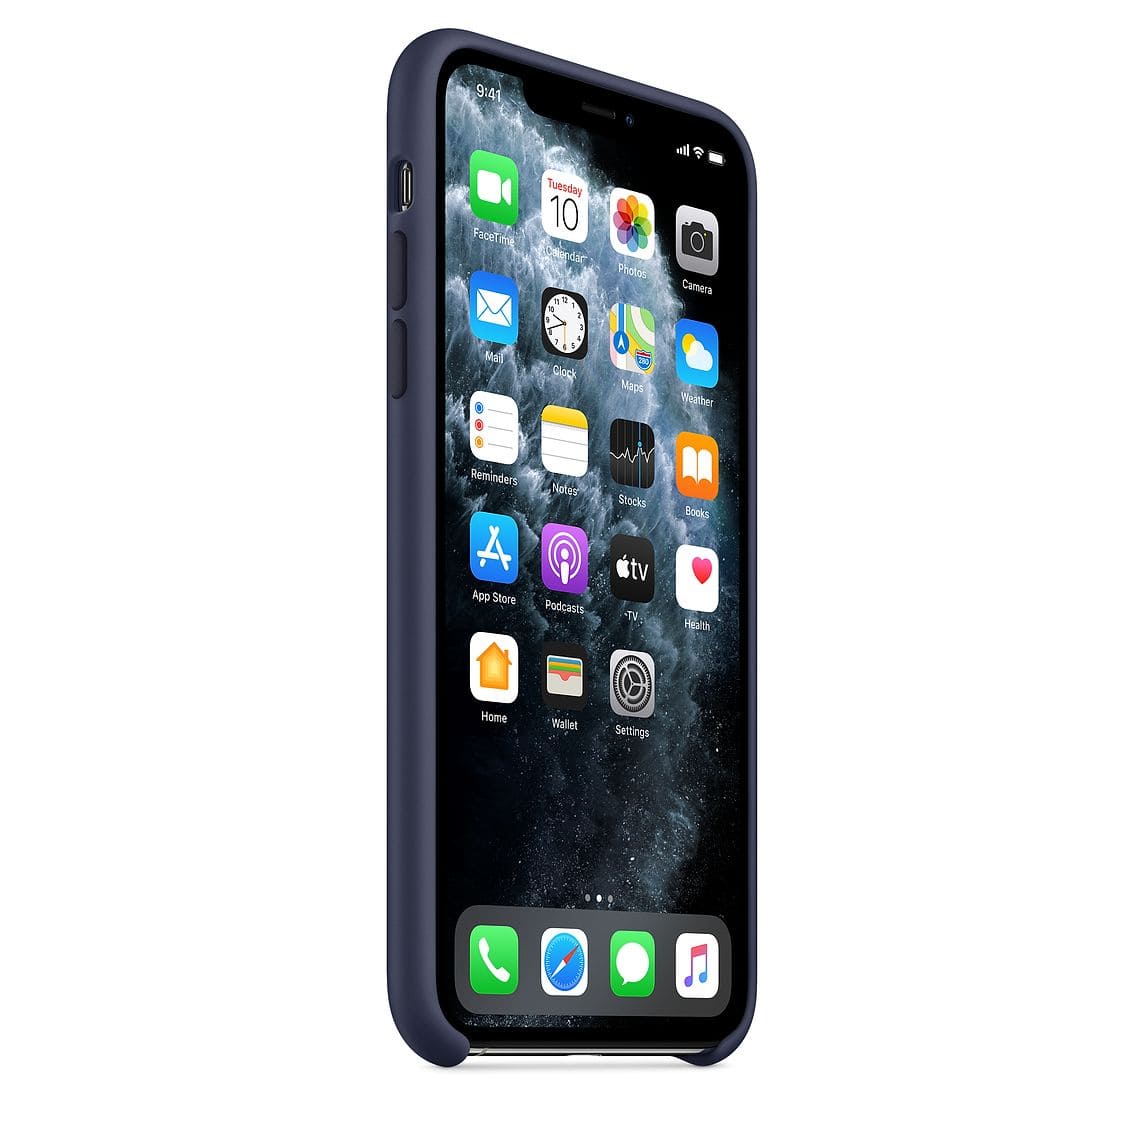 Фото — Чехол Apple для iPhone 11 Pro Max, силикон, «синий лён»